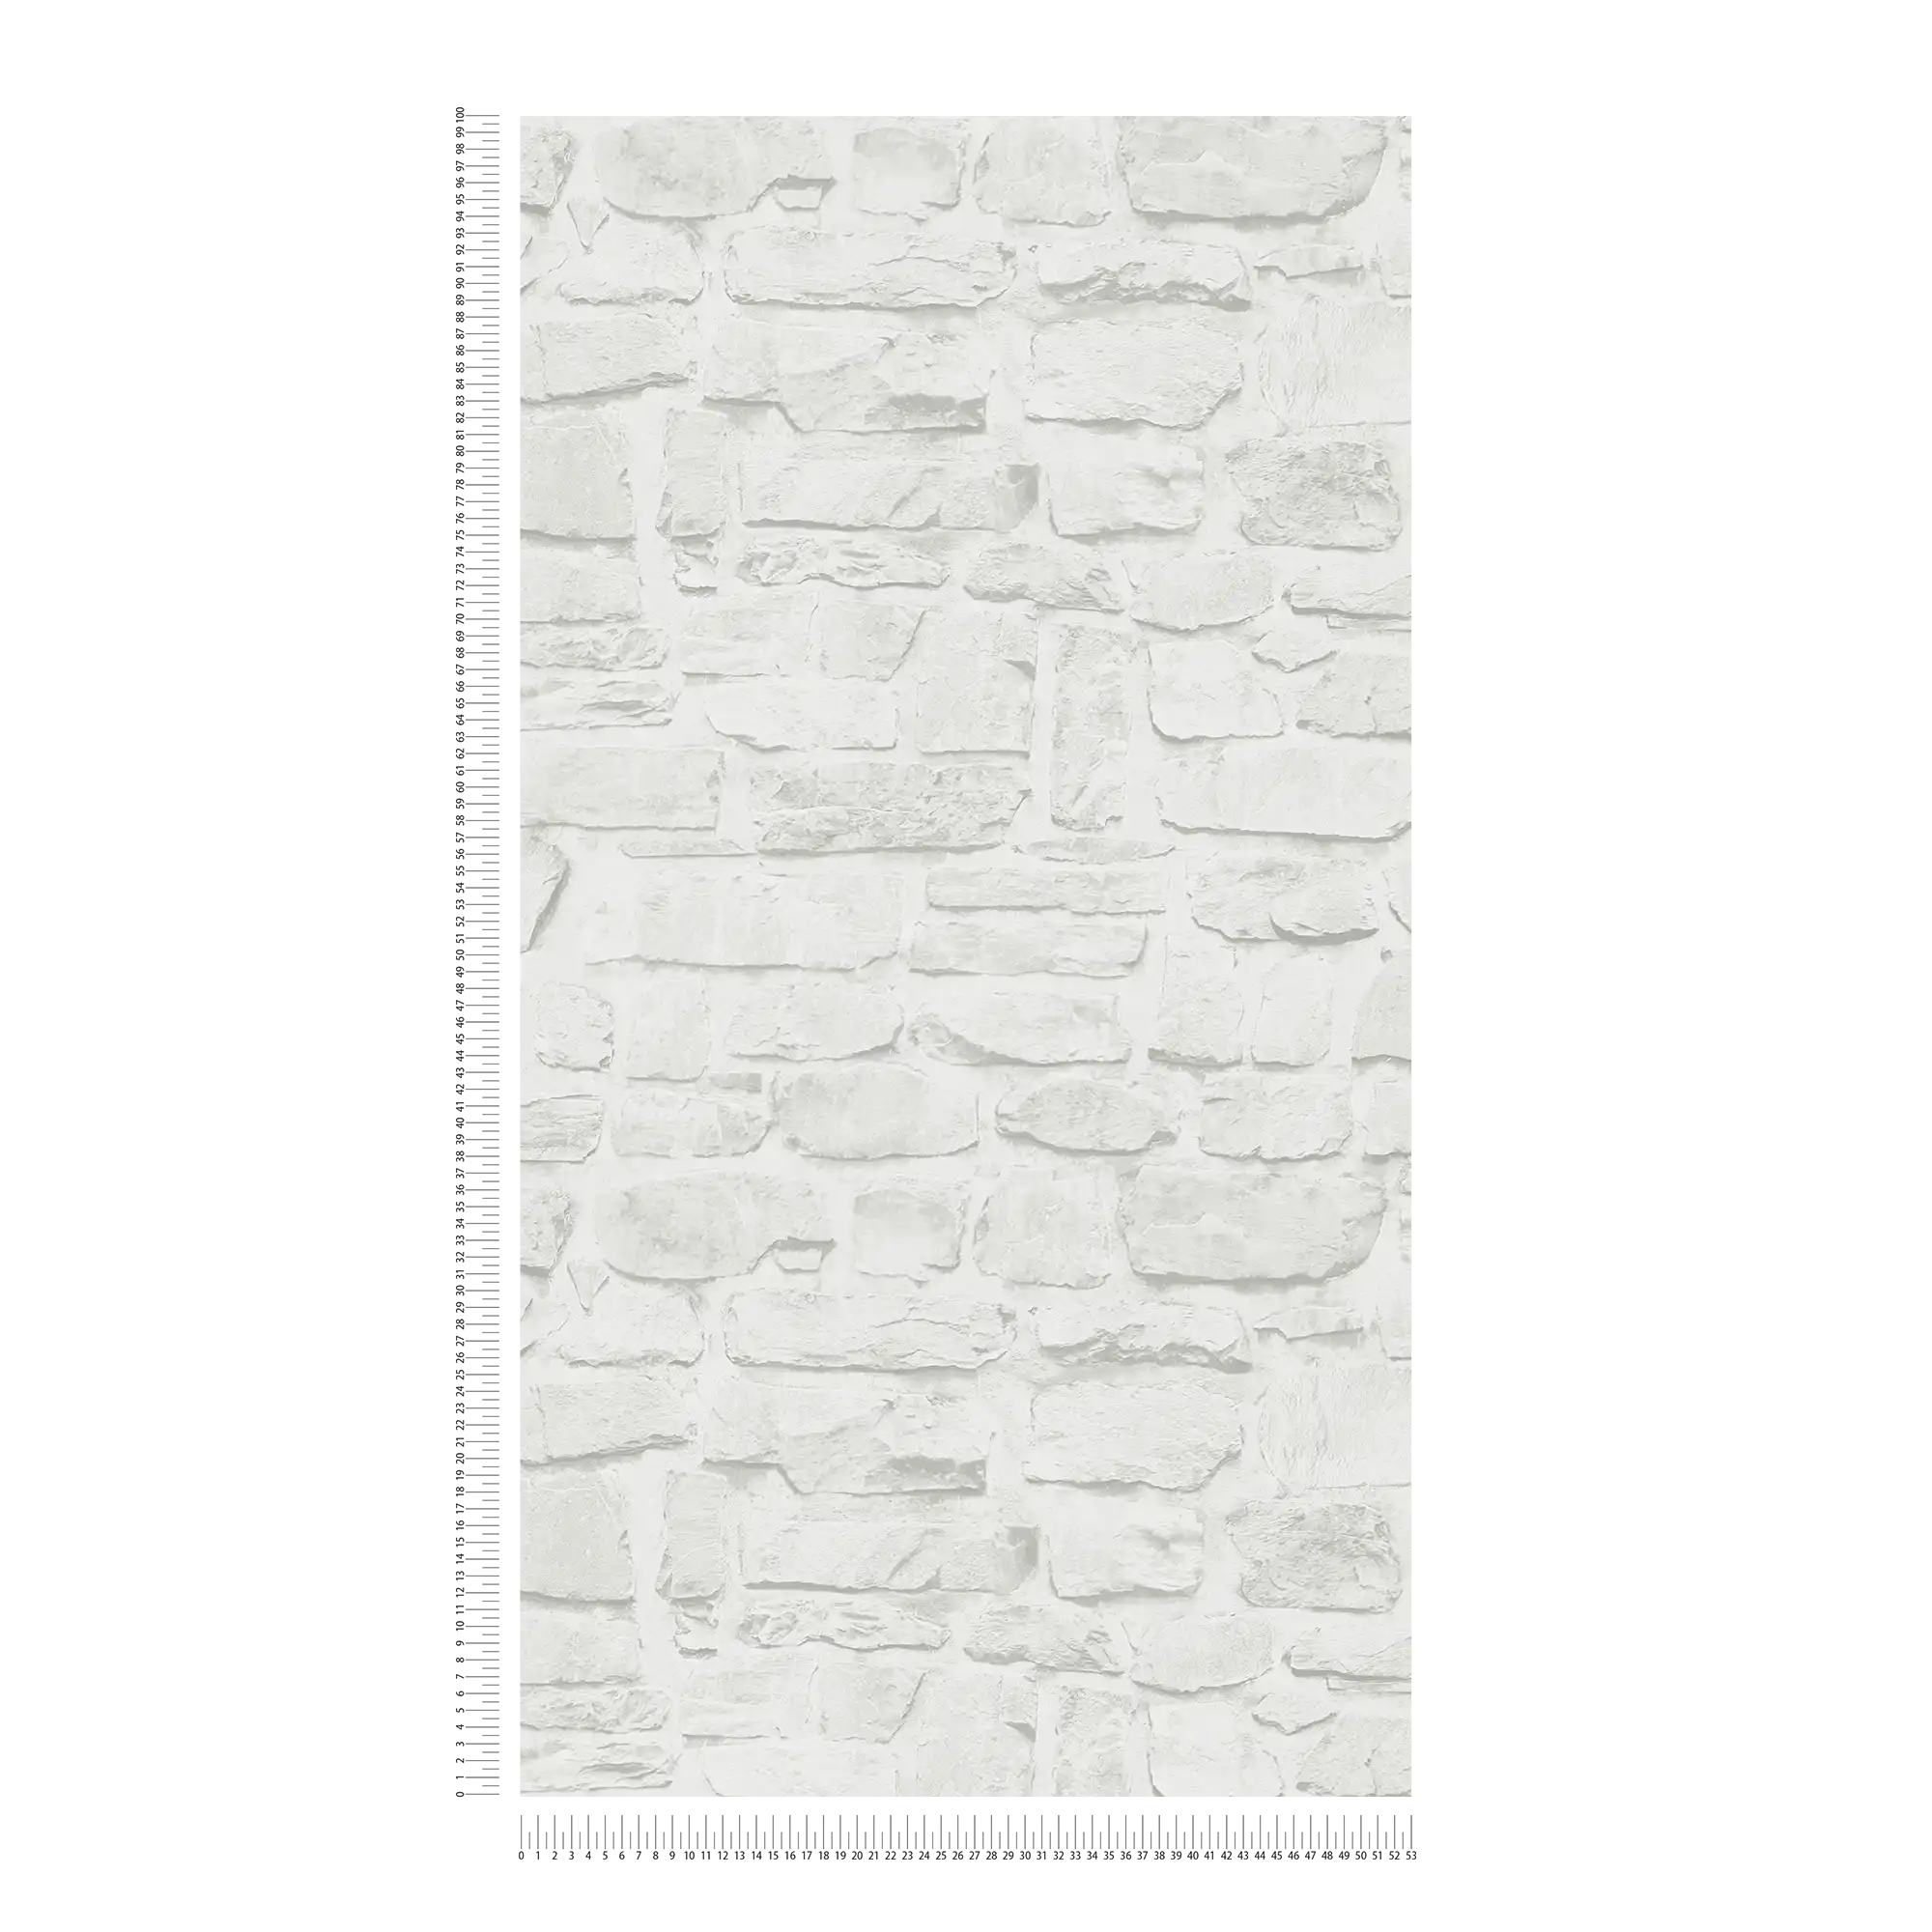             Carta da parati autoadesiva | Look pietra bianca con ottica 3D - Bianco, Grigio
        